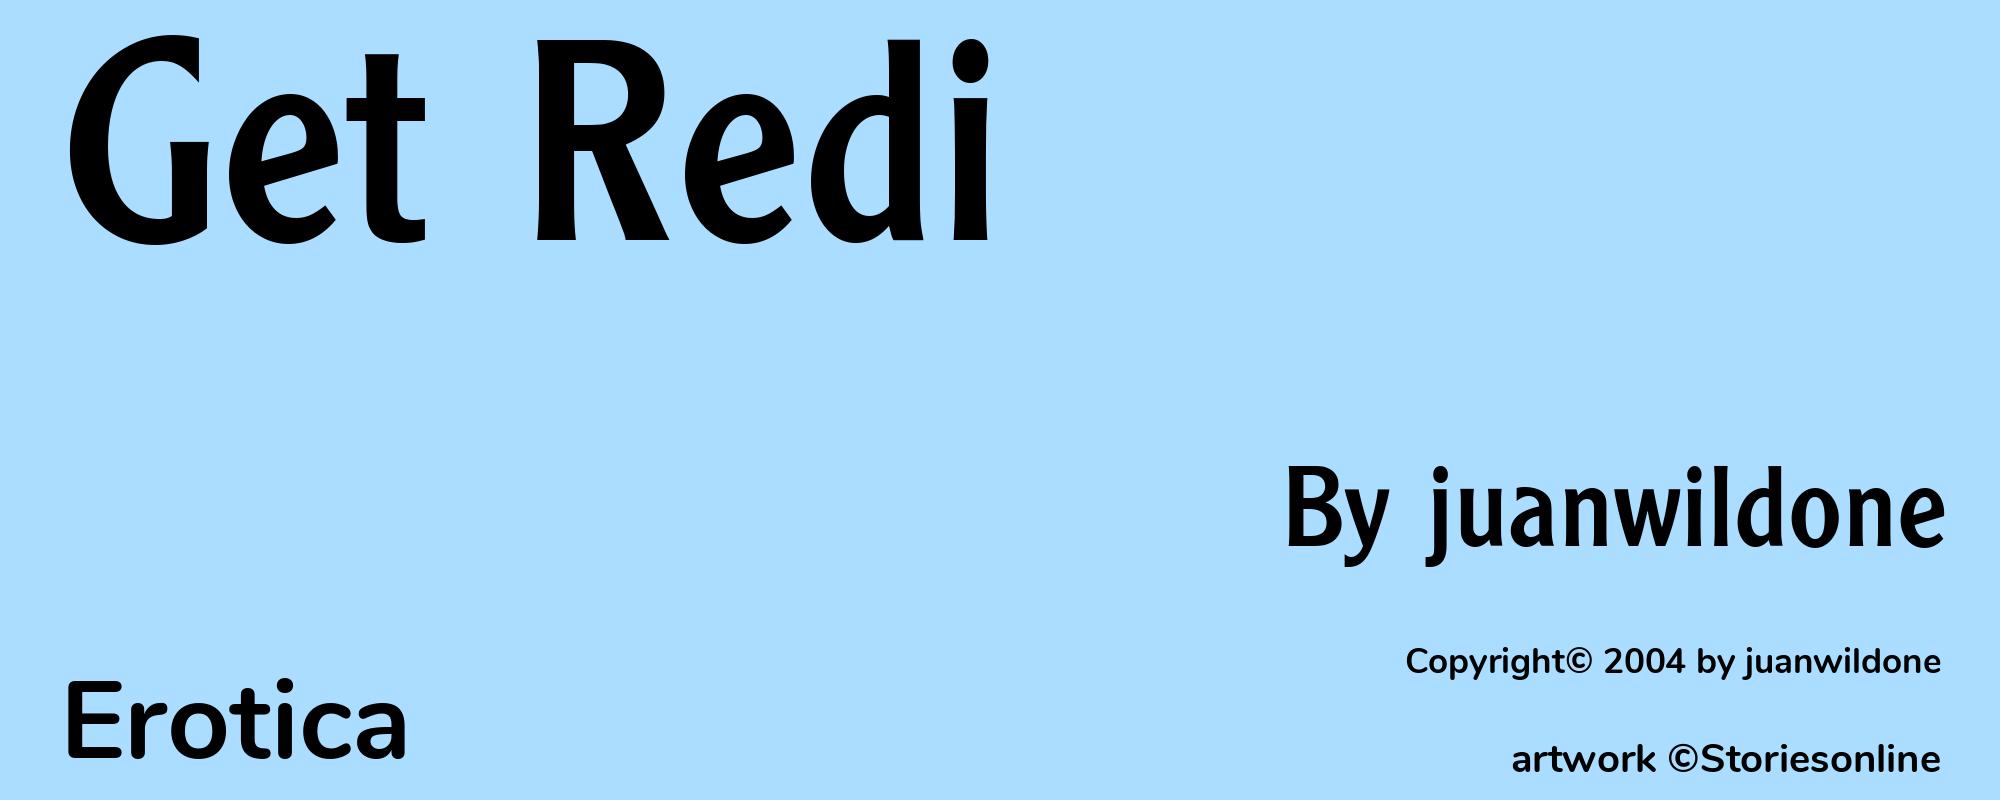 Get Redi - Cover